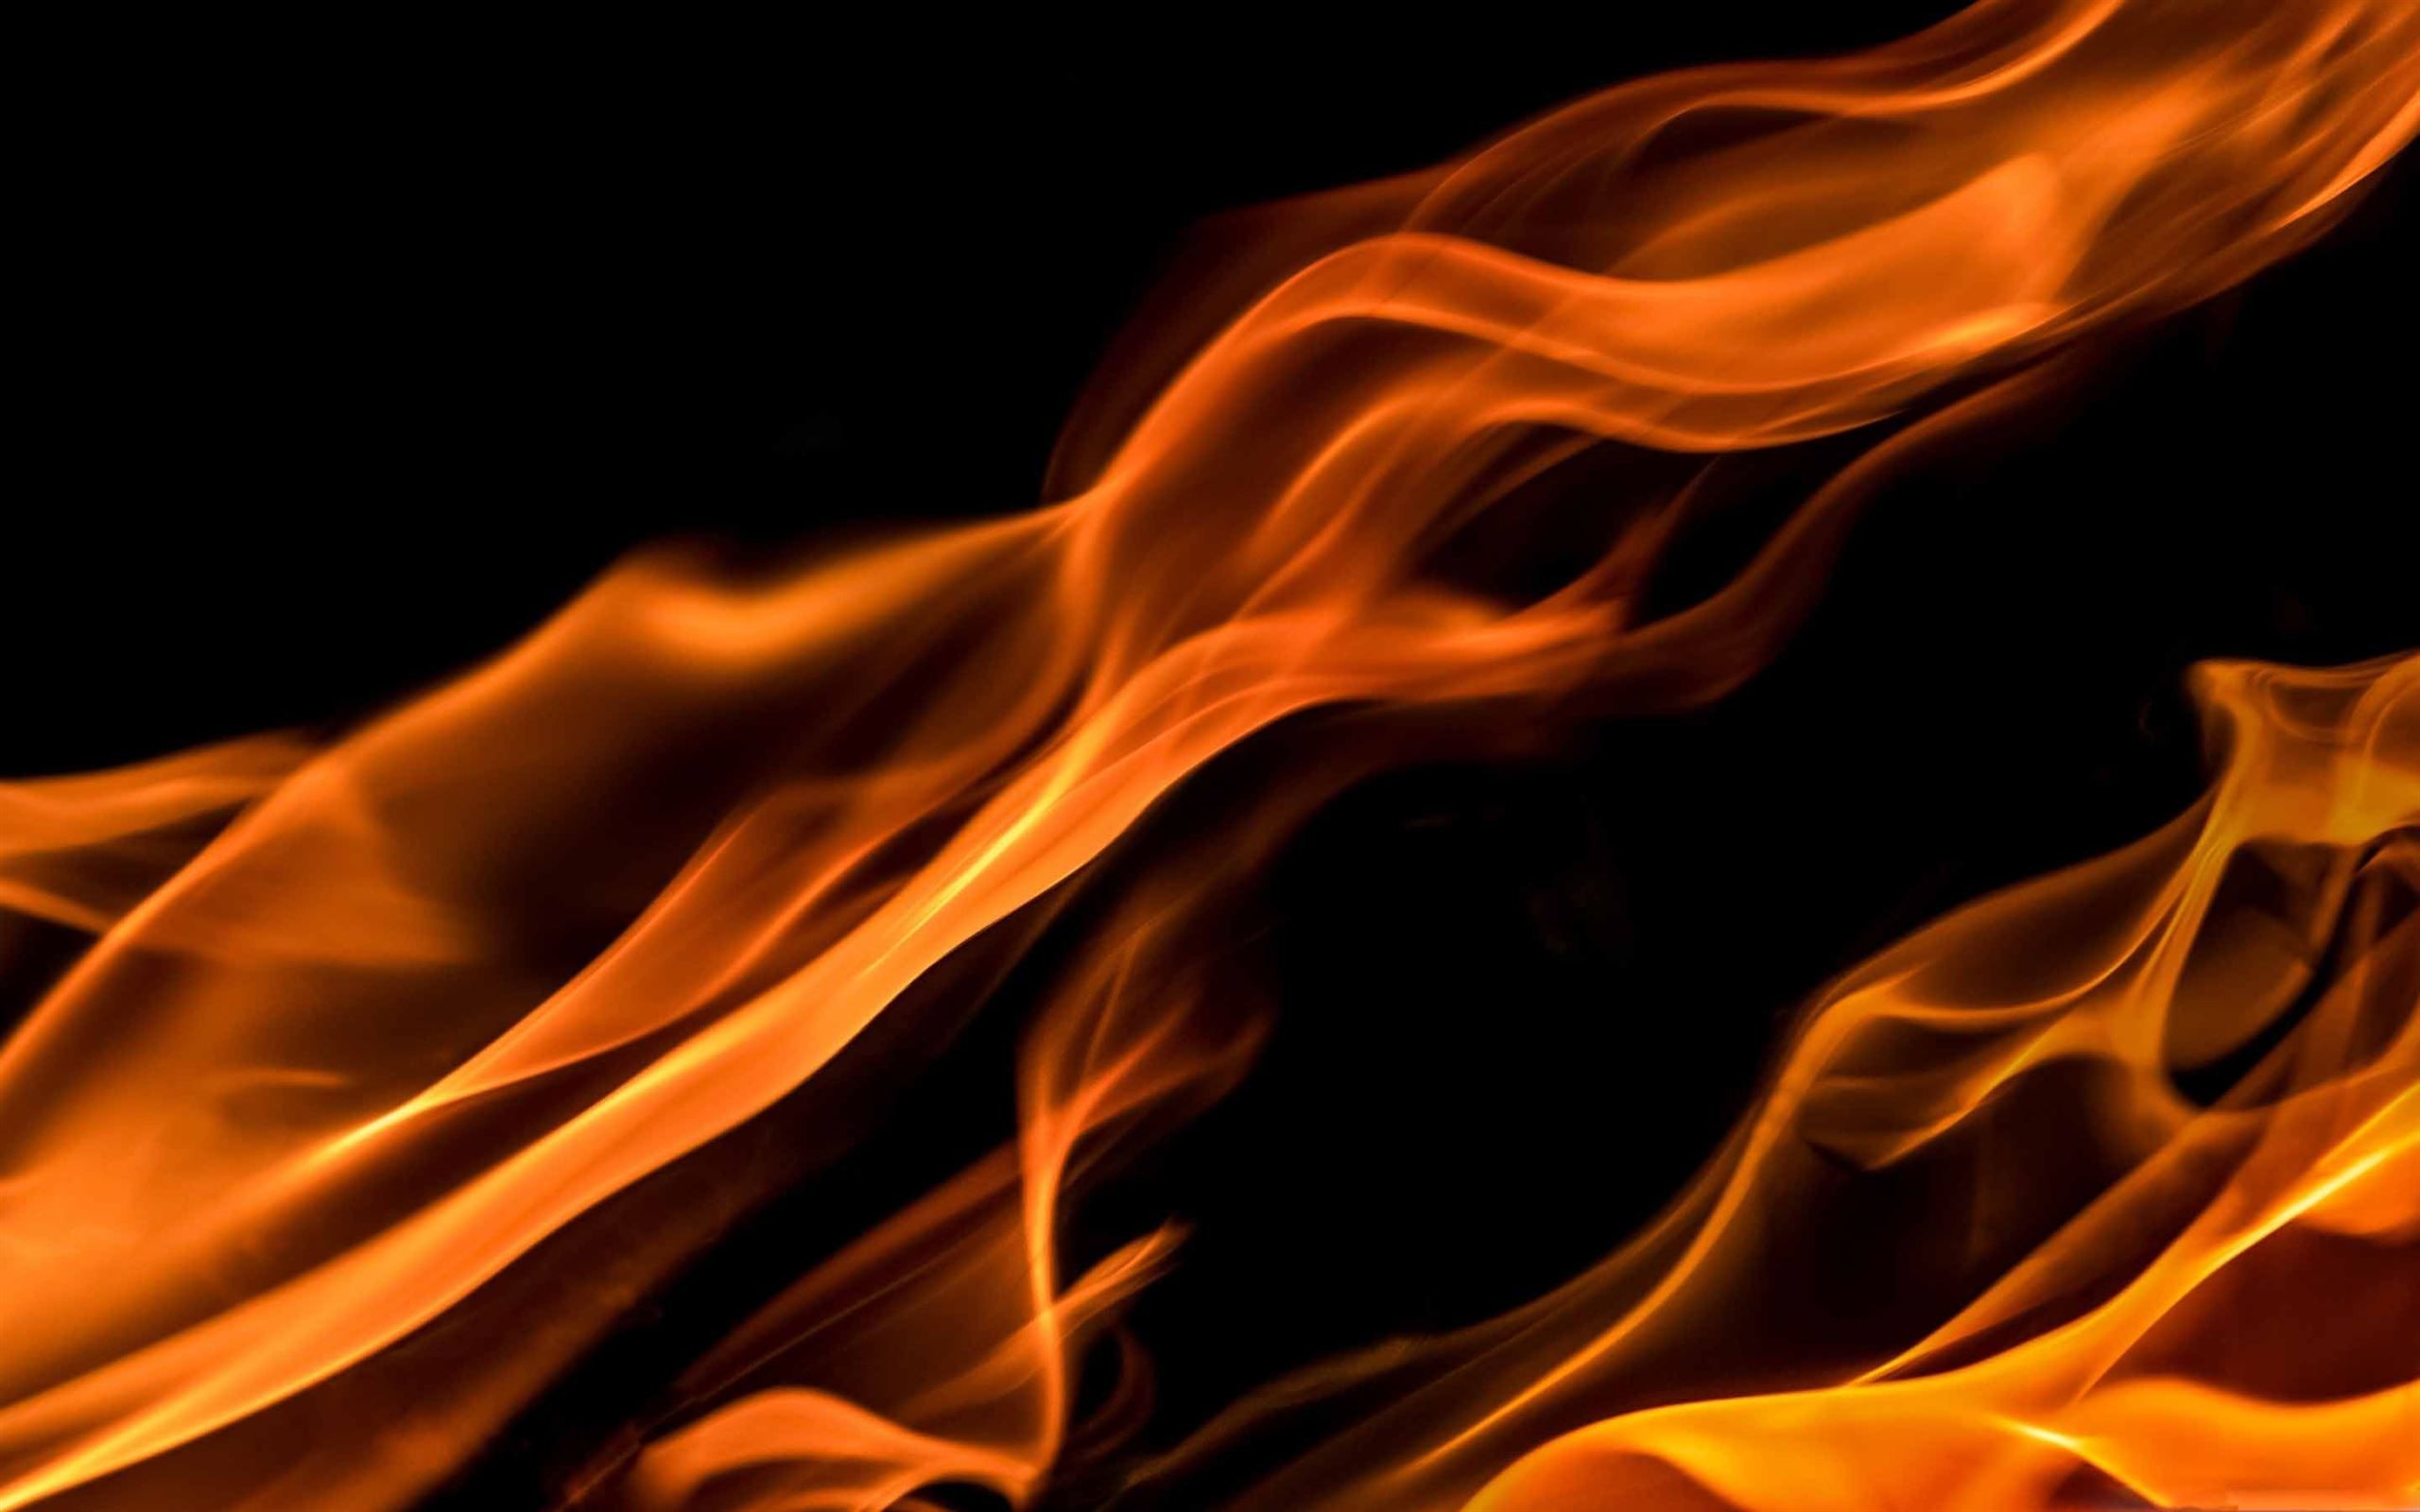 Fire Flames MacBook Air Wallpaper Download